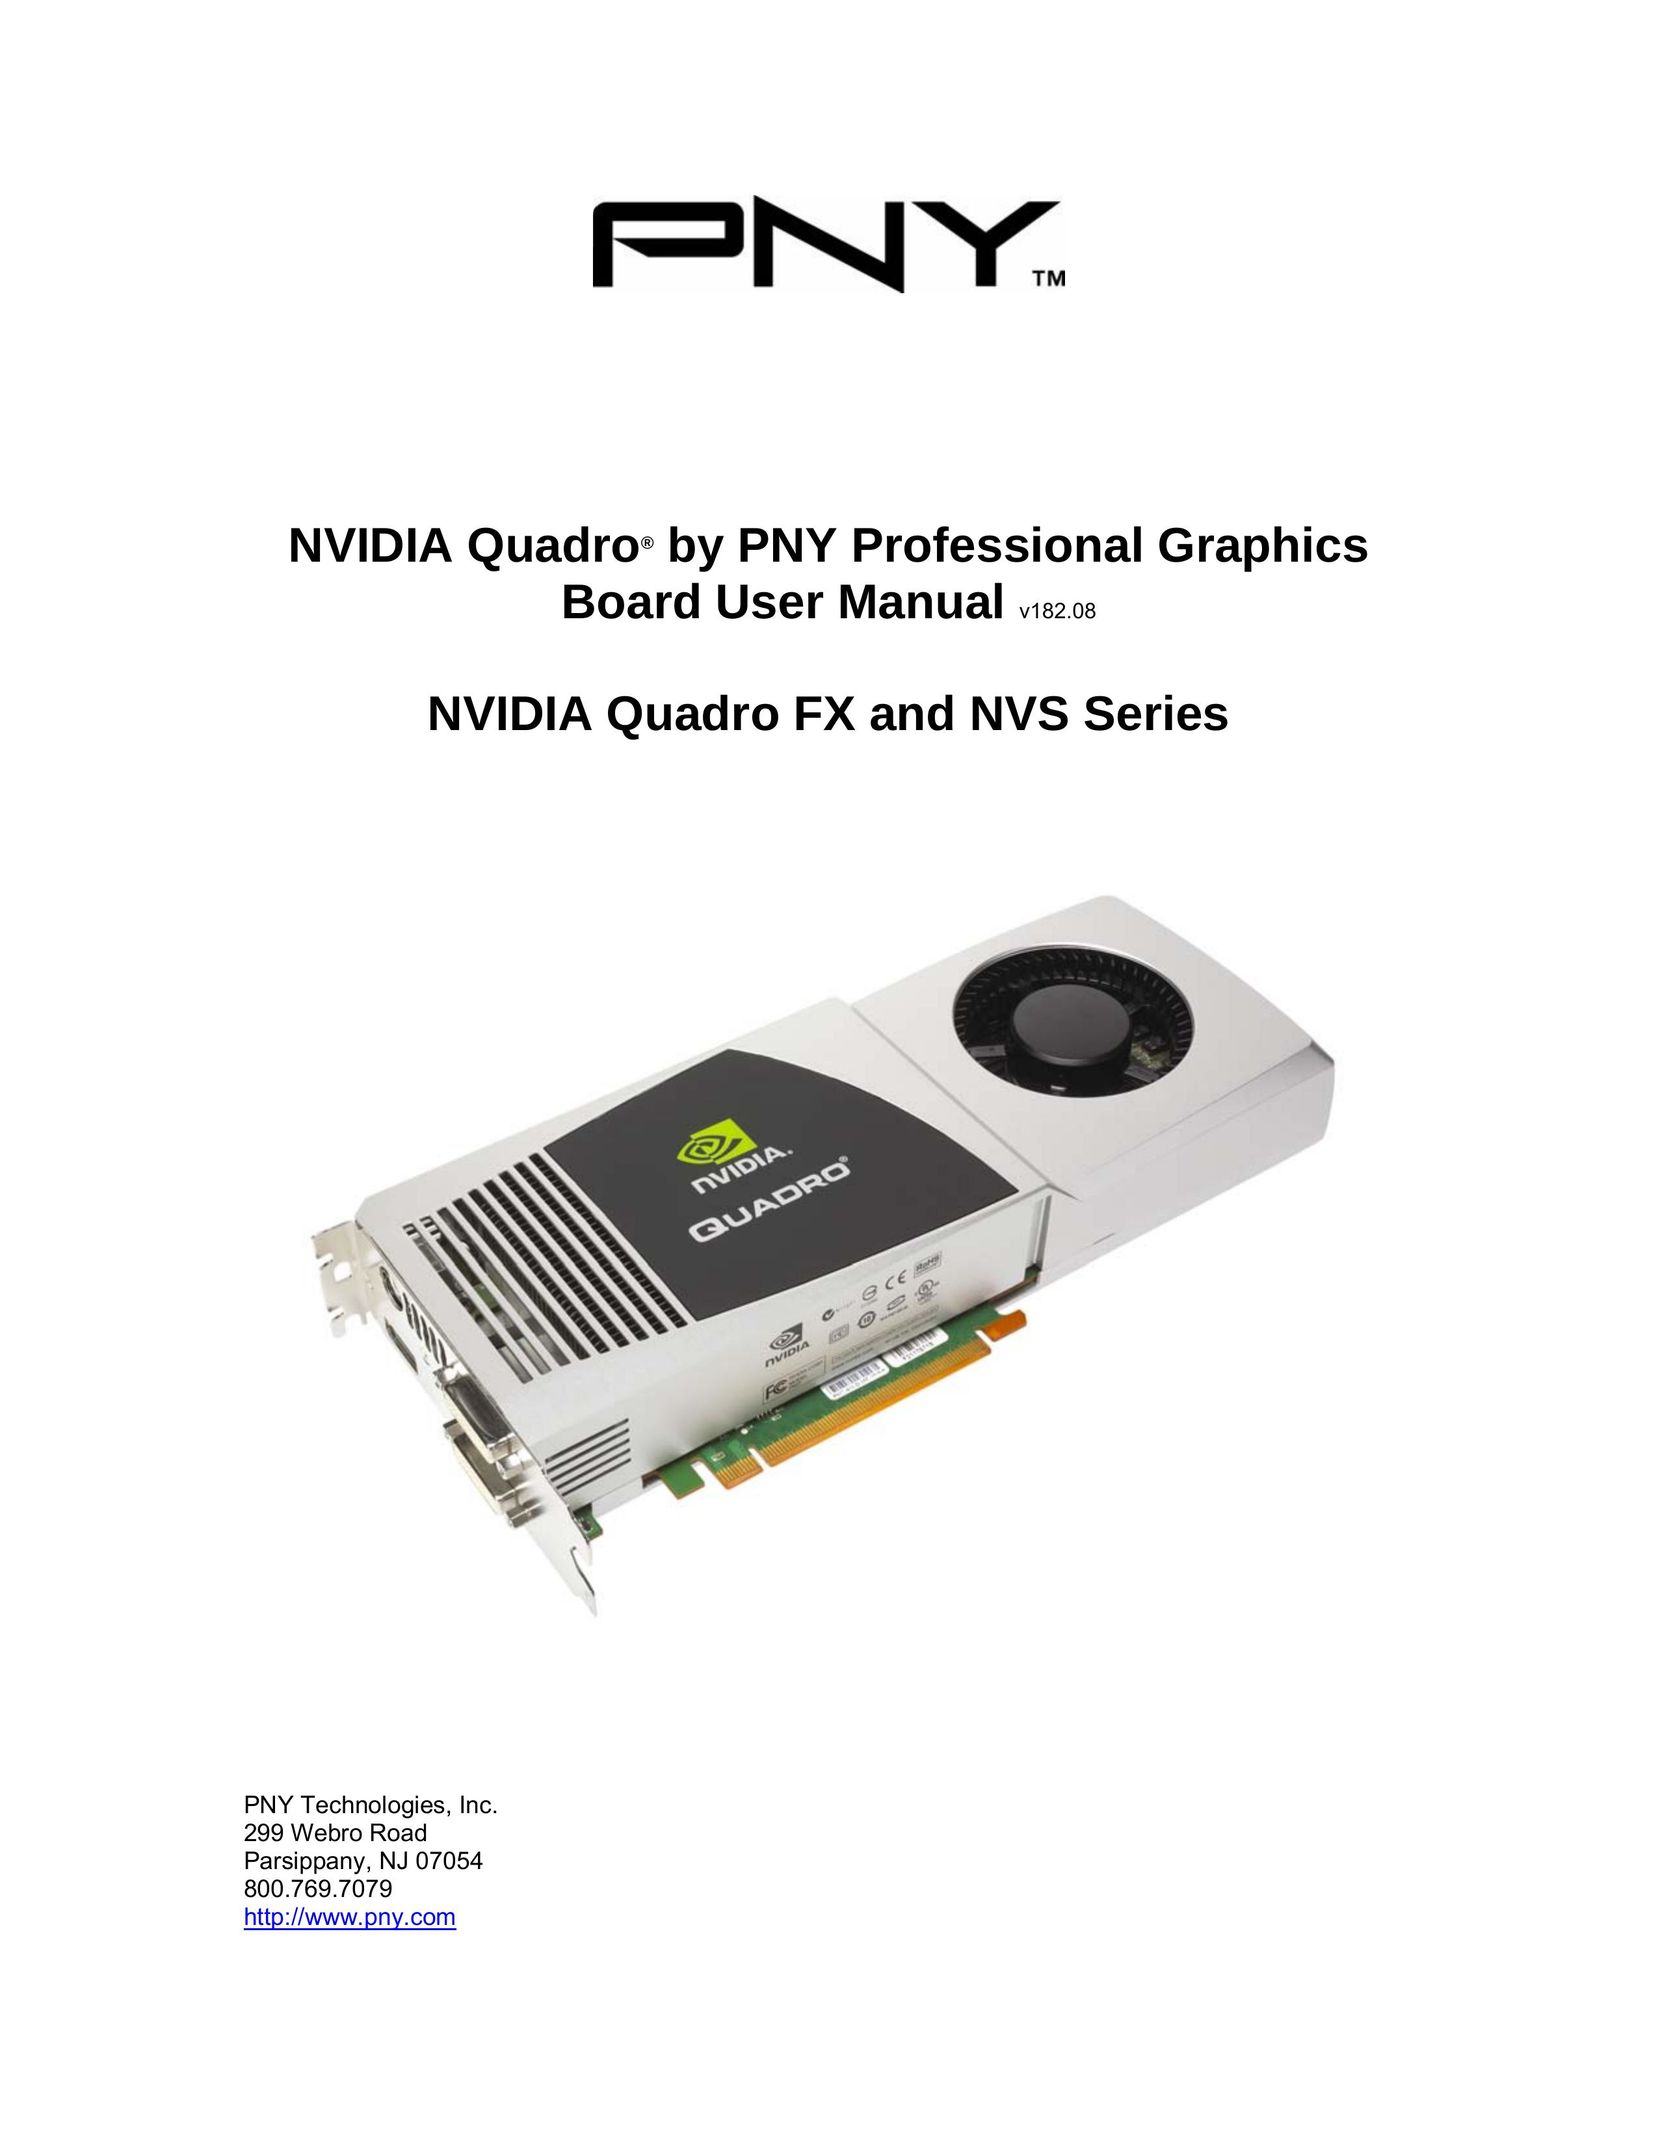 PNY NVS 440 Computer Hardware User Manual